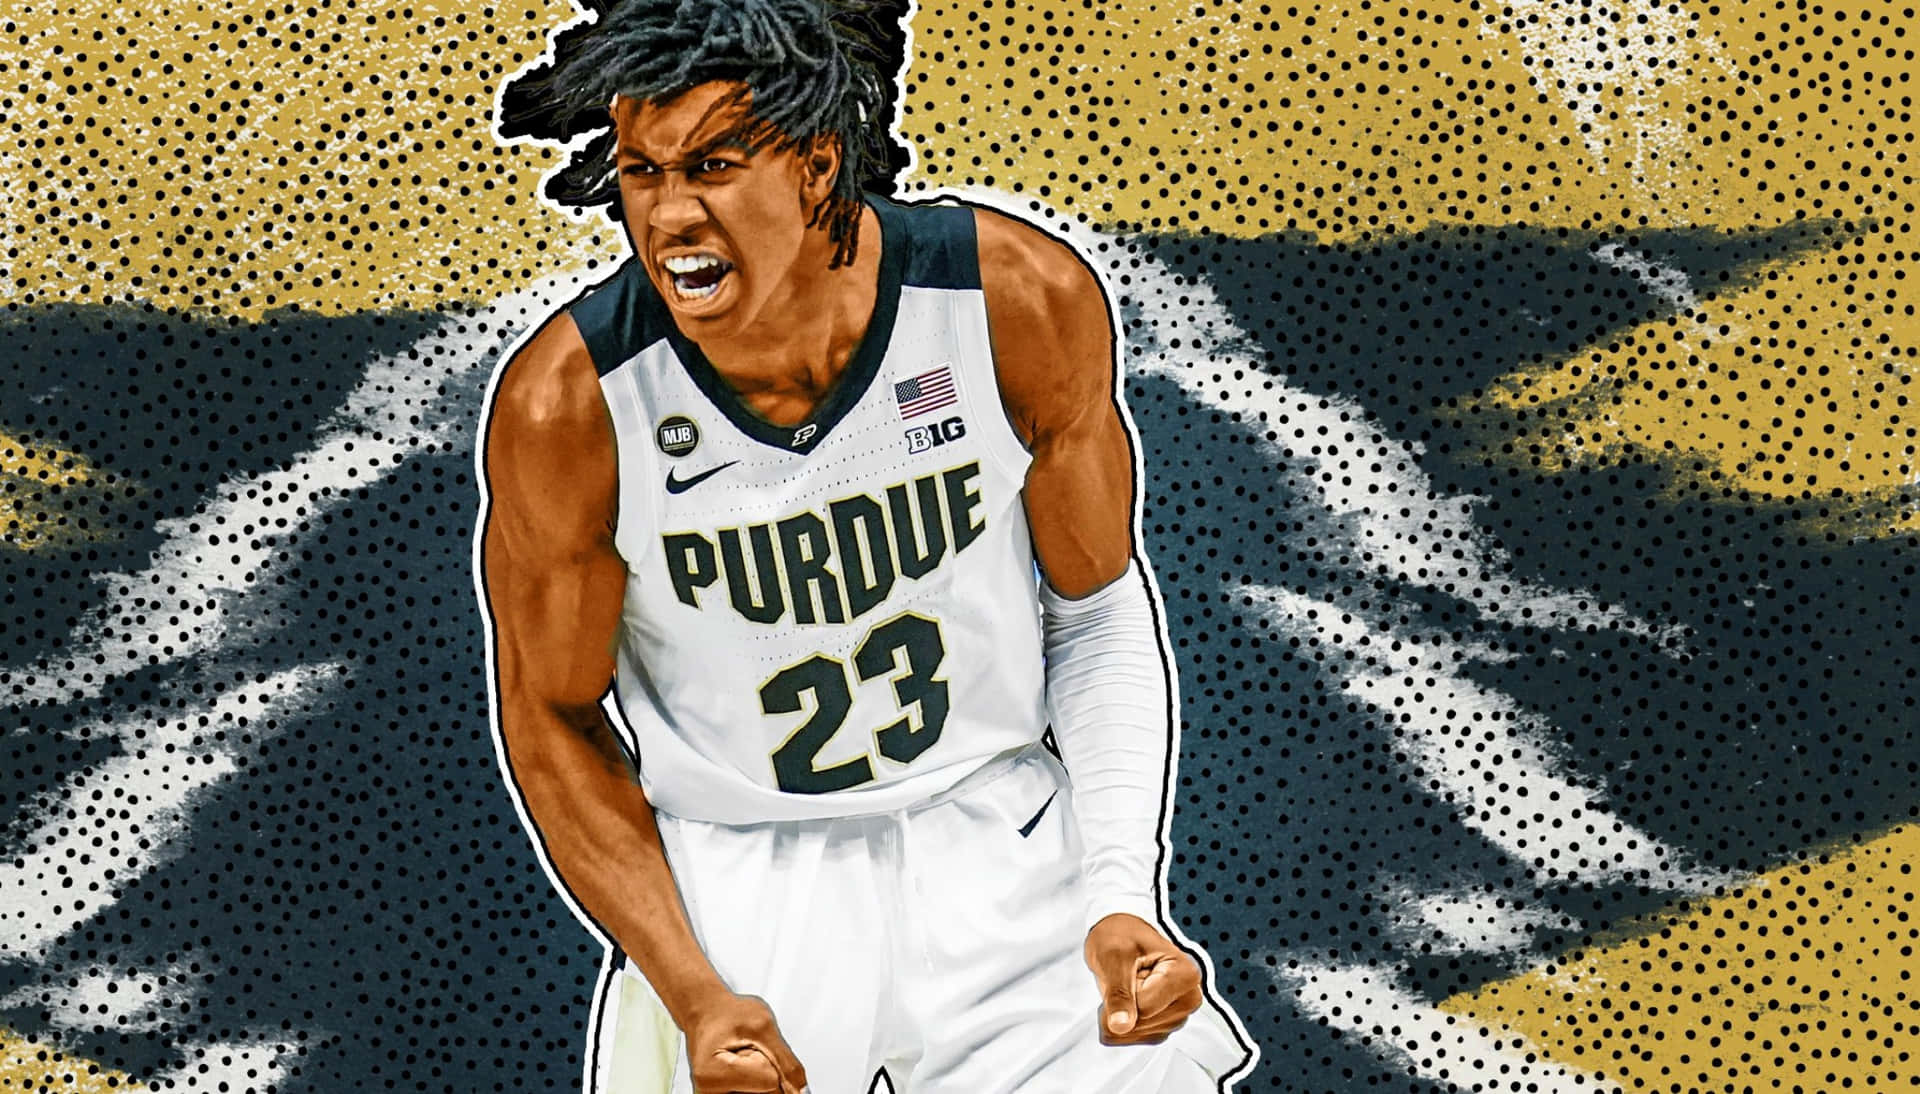 Purdue Basketball Player Celebration Wallpaper